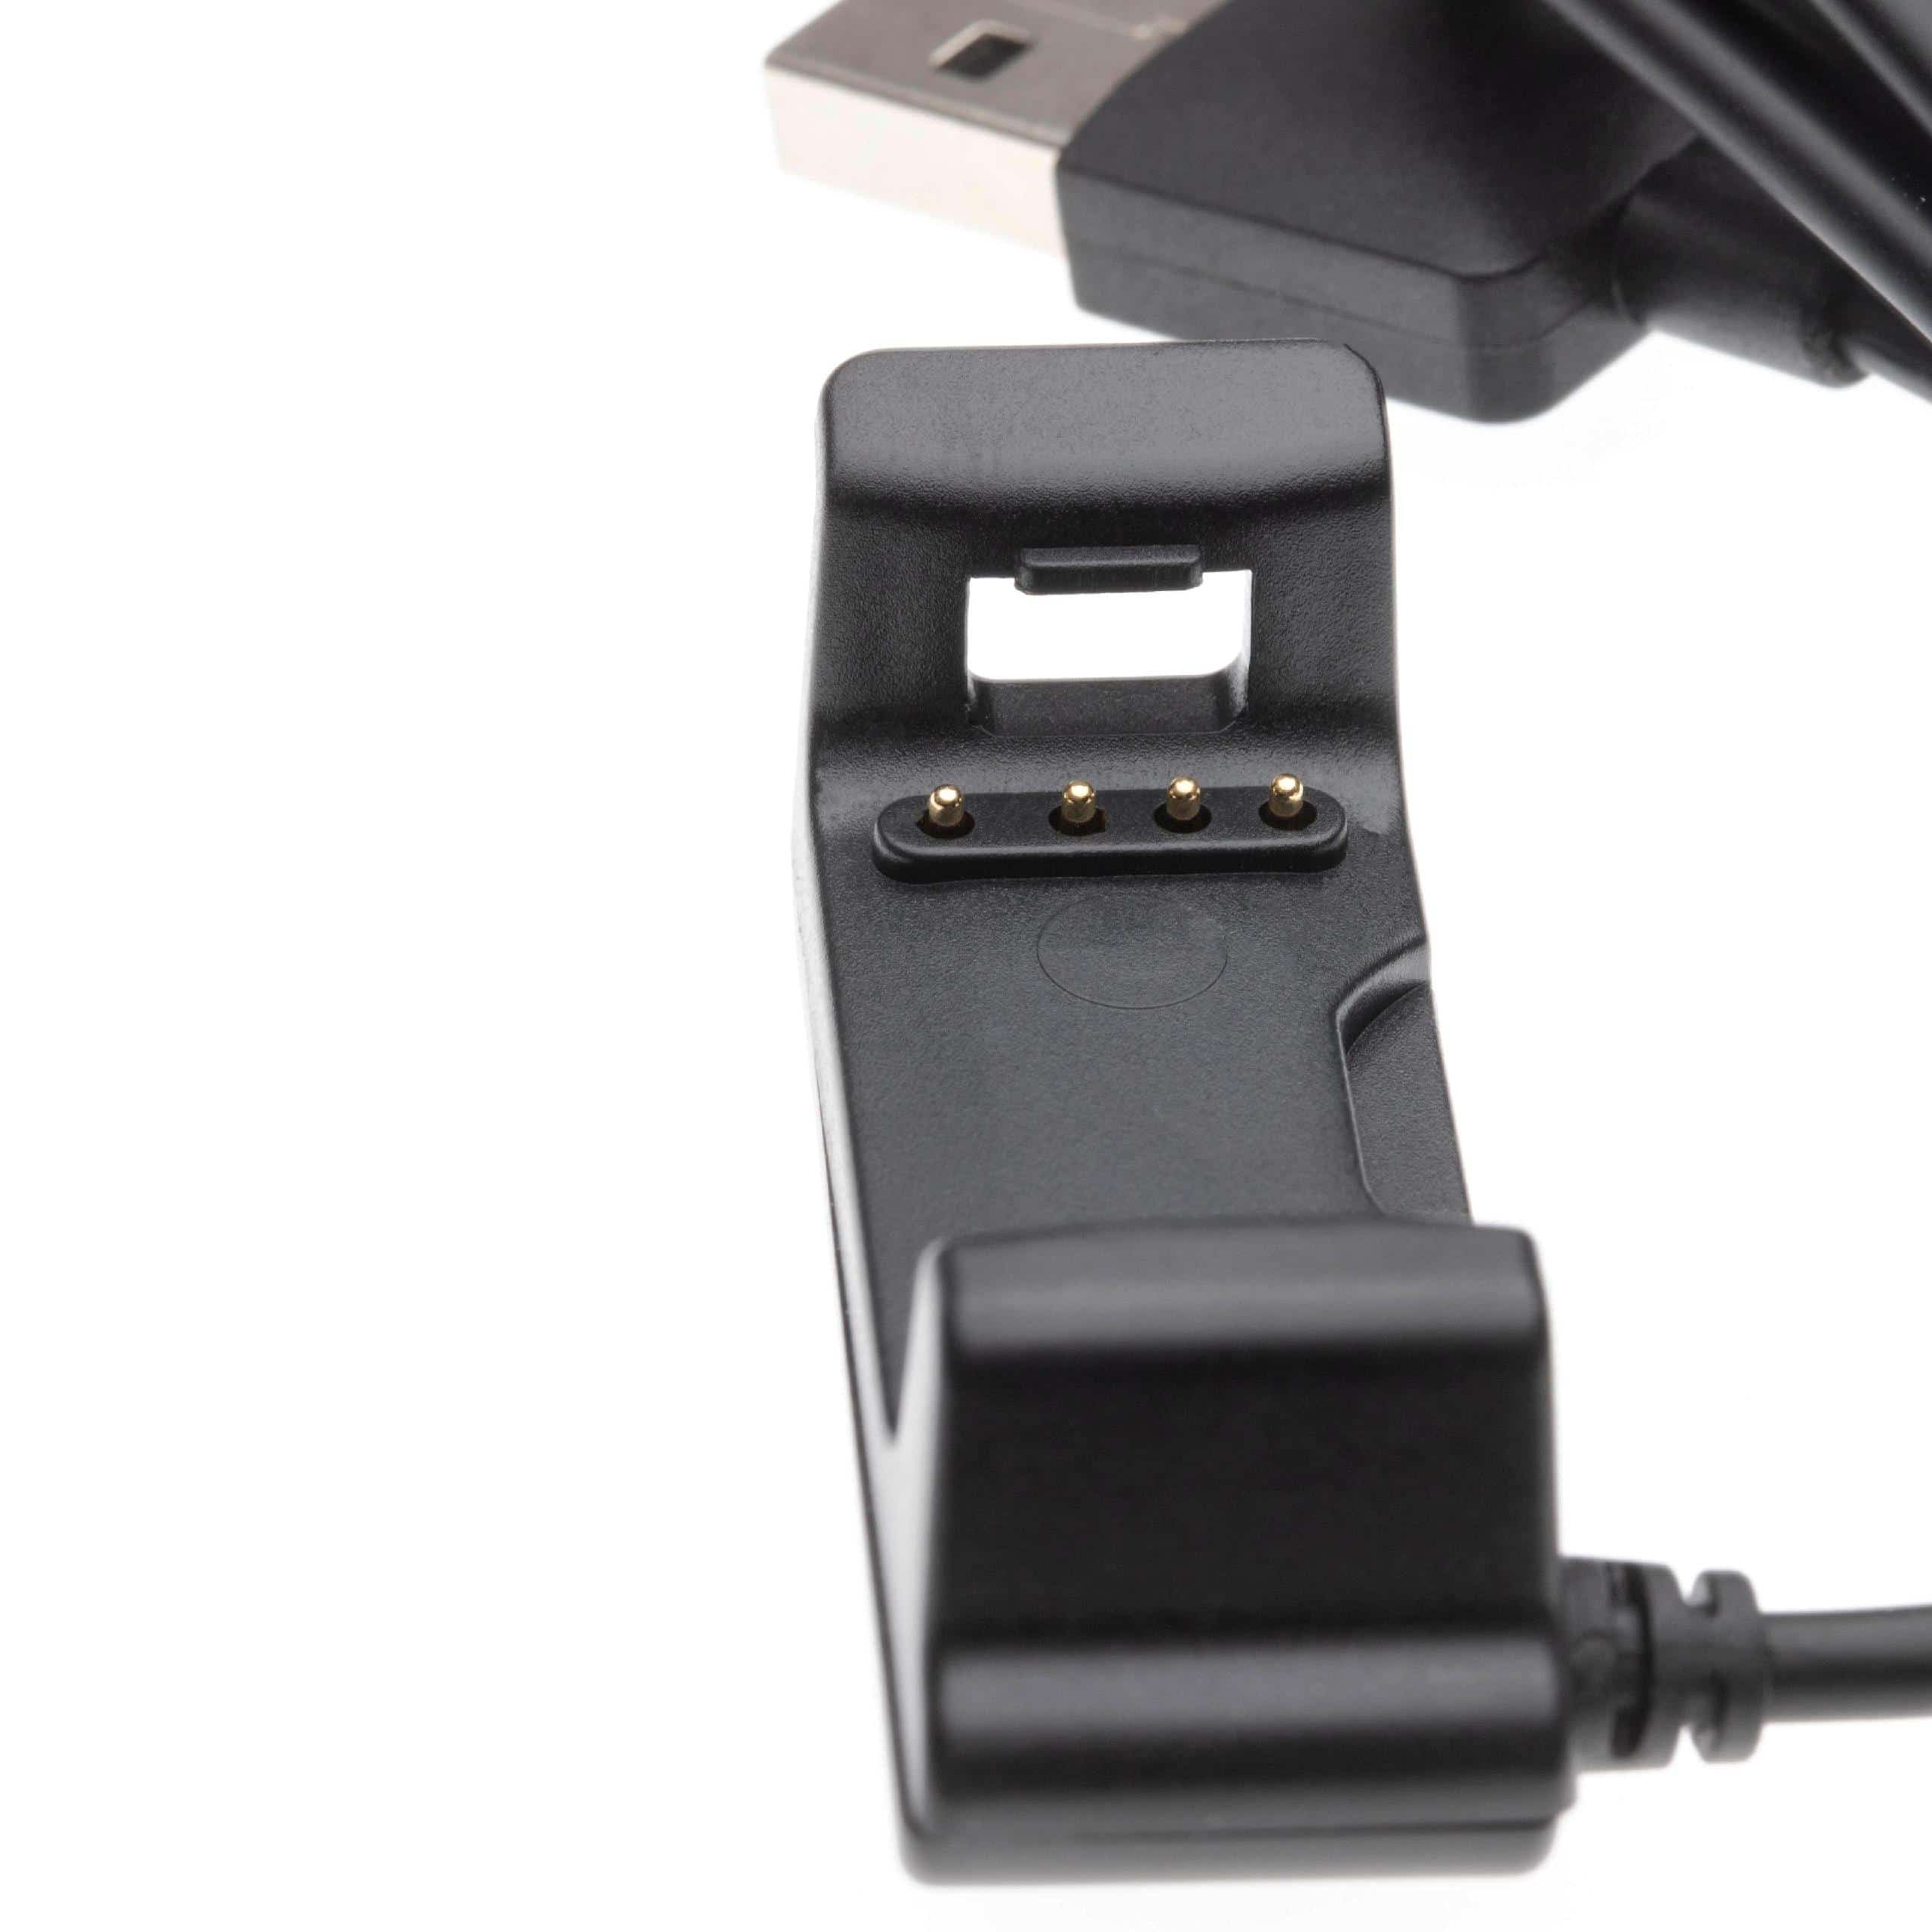 Kabel do ładowania smartwatch Garmin Vivoactive HR - Kabel, 100 cm, czarny